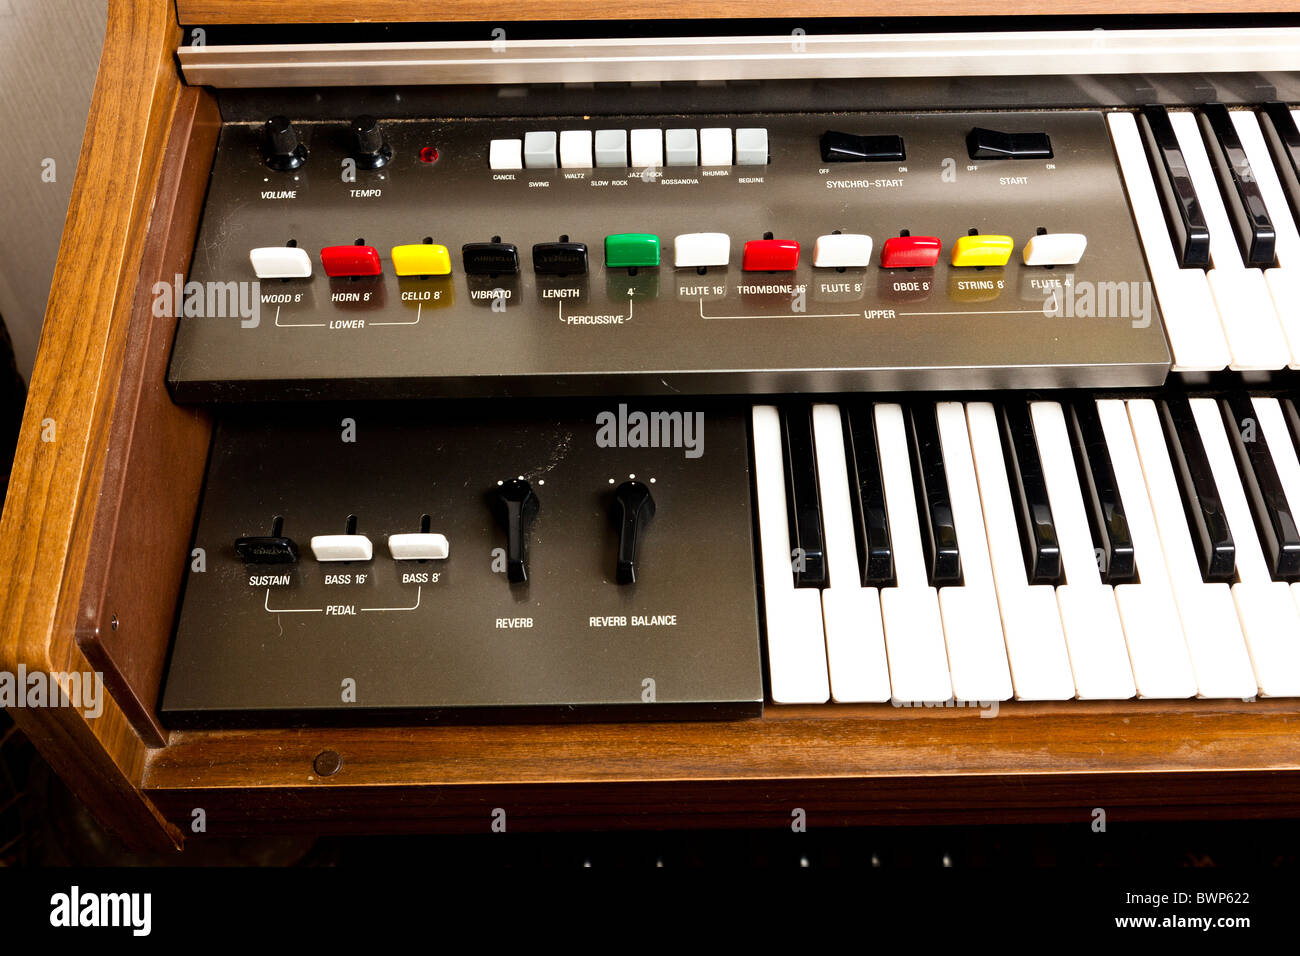 Yamaha Electone Organ Keyboard Stock Photo